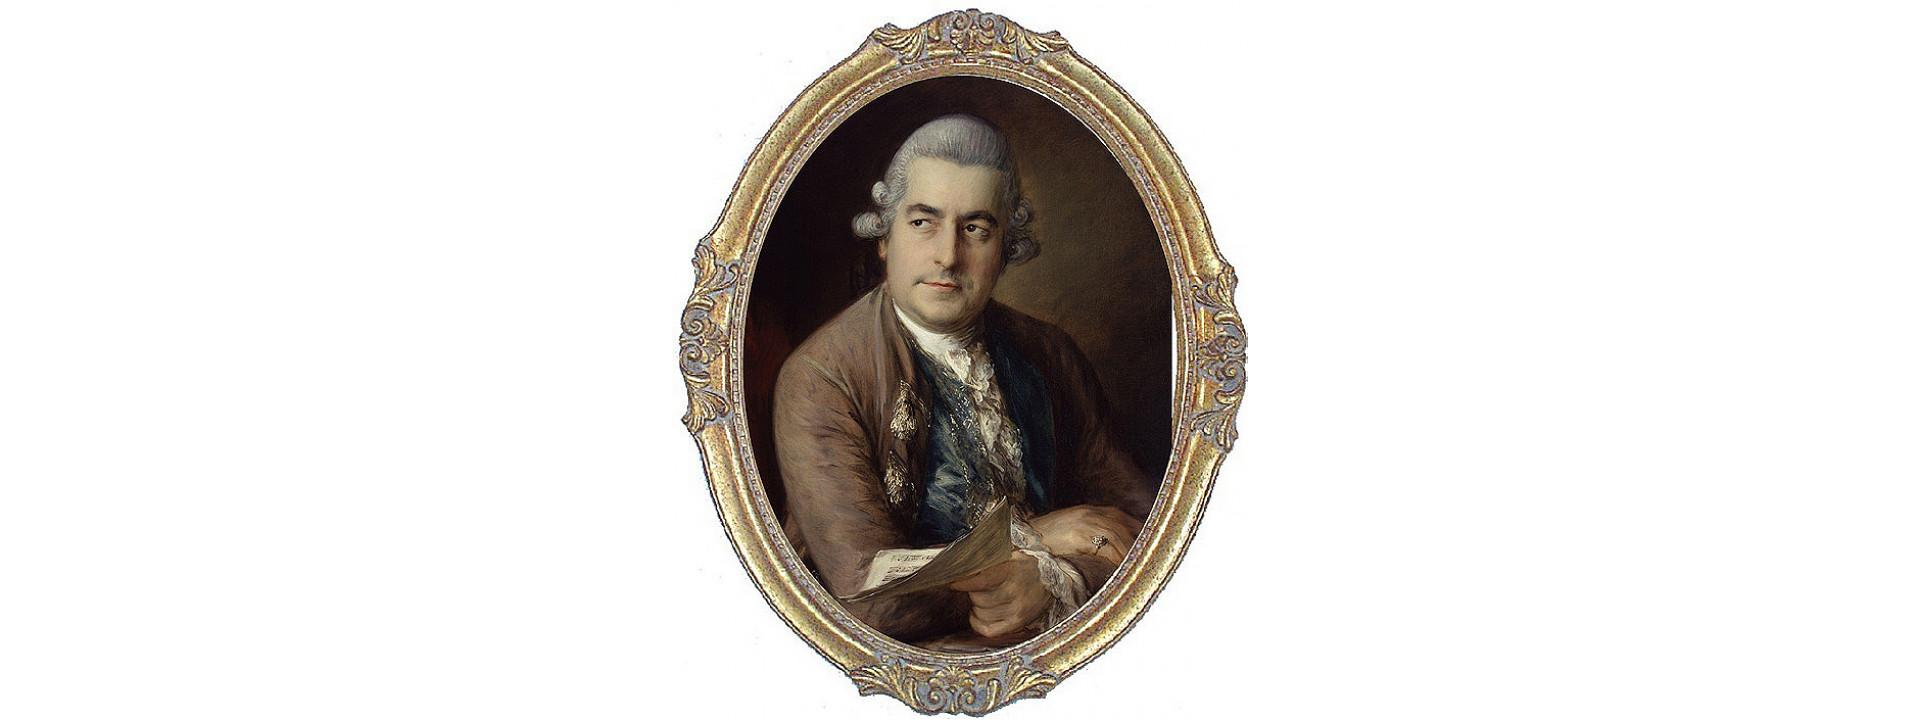 PORTRAIT OF JOHANN CHRISTIAN BACH, THOMAS GAINSBOROUGH 1727